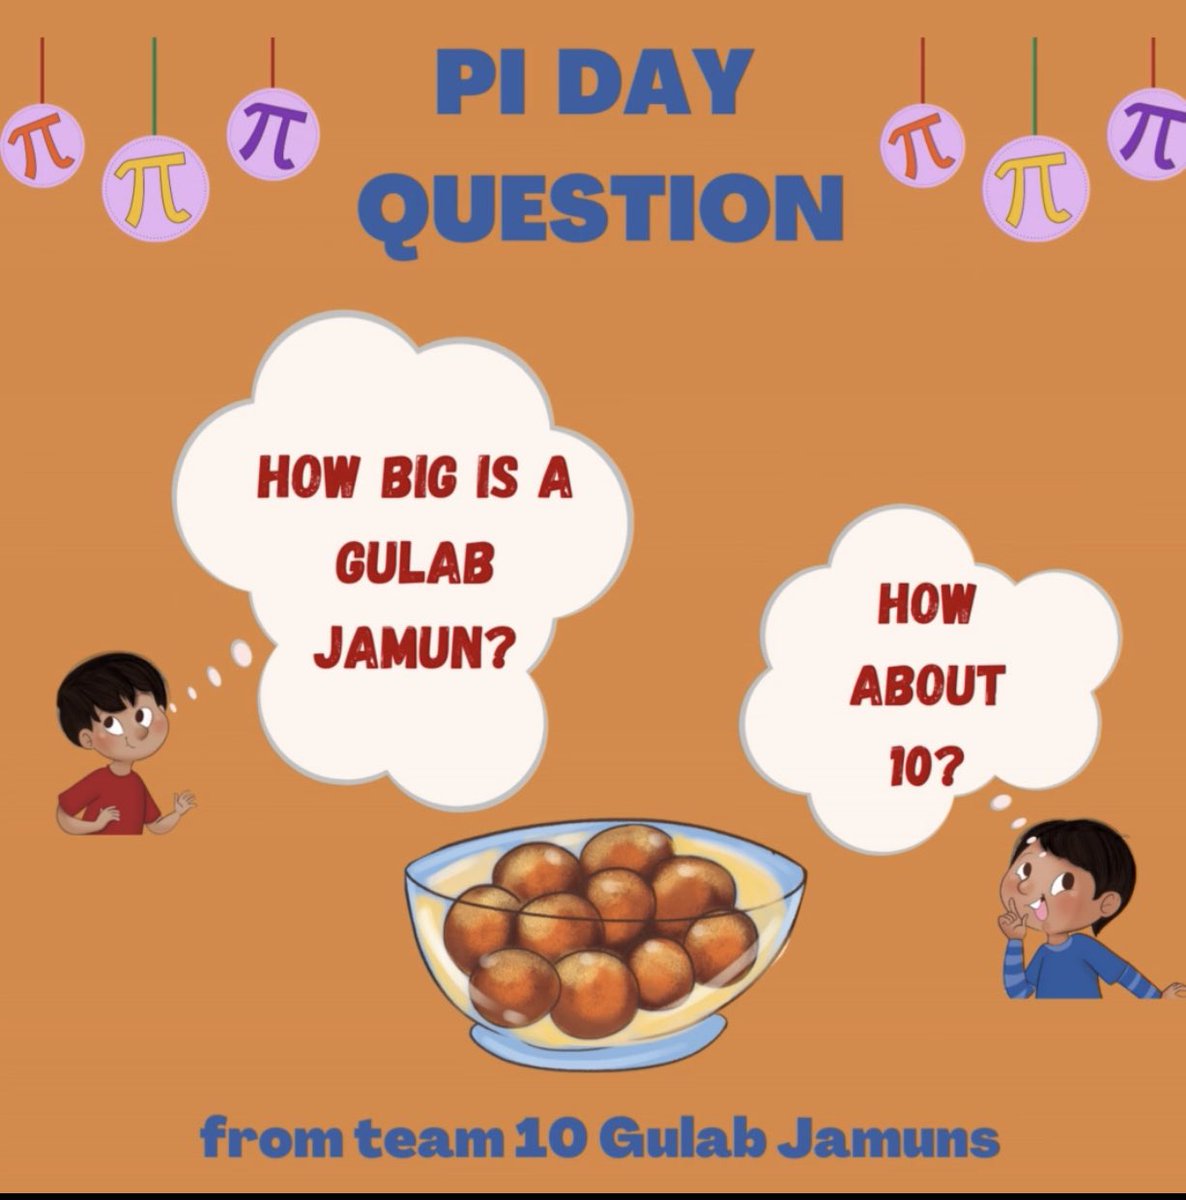 Happy Pi Day everyone! 
Math is better with Pis, pies, and Gulab Jamuns

#childrensmathfiction #storytellingmath #pidaybook #pidaykidsbook #santaclaraauthor #cupertinoauthor #bayareaauthor #mathmadefun #countingbook #happypiday 

#10gulabjamuns is on Amazon